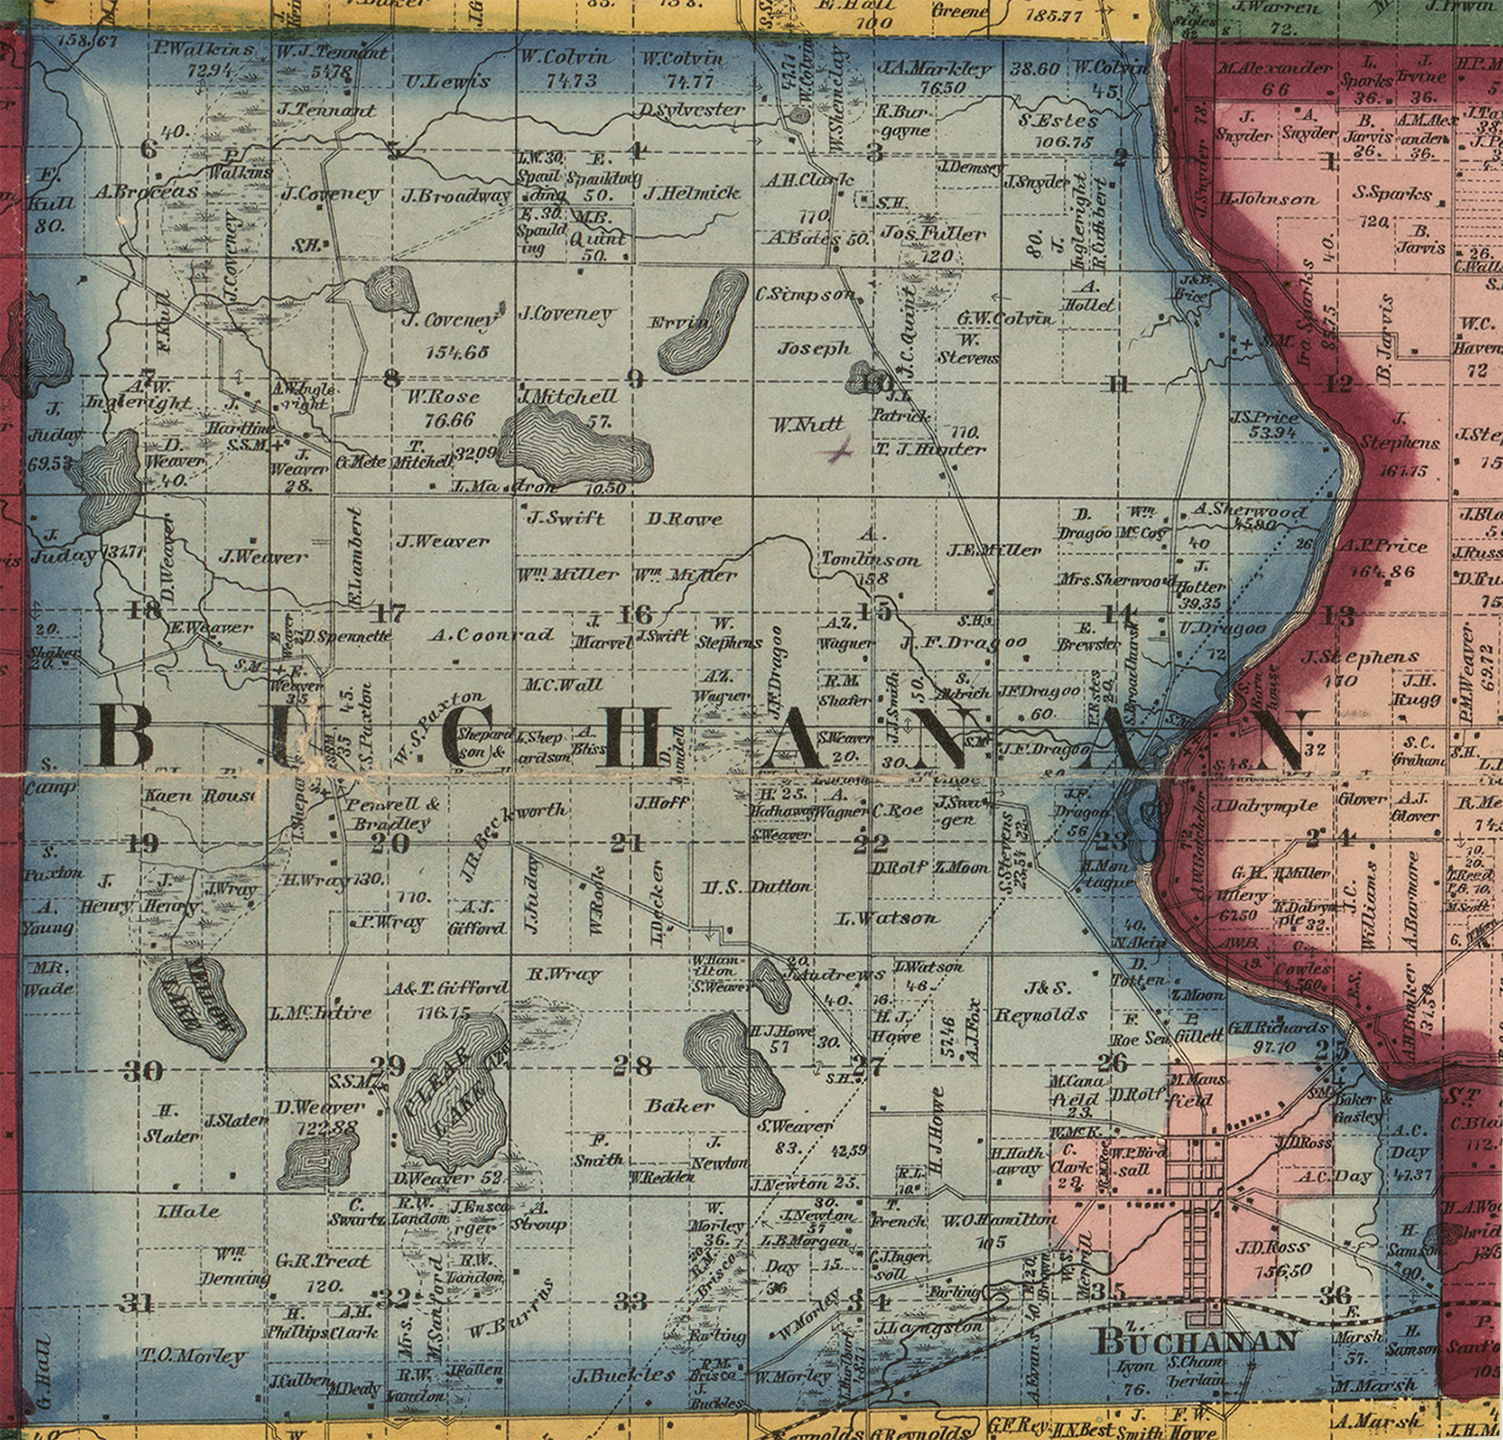 1860 Buchanan Township, Michigan landownership map